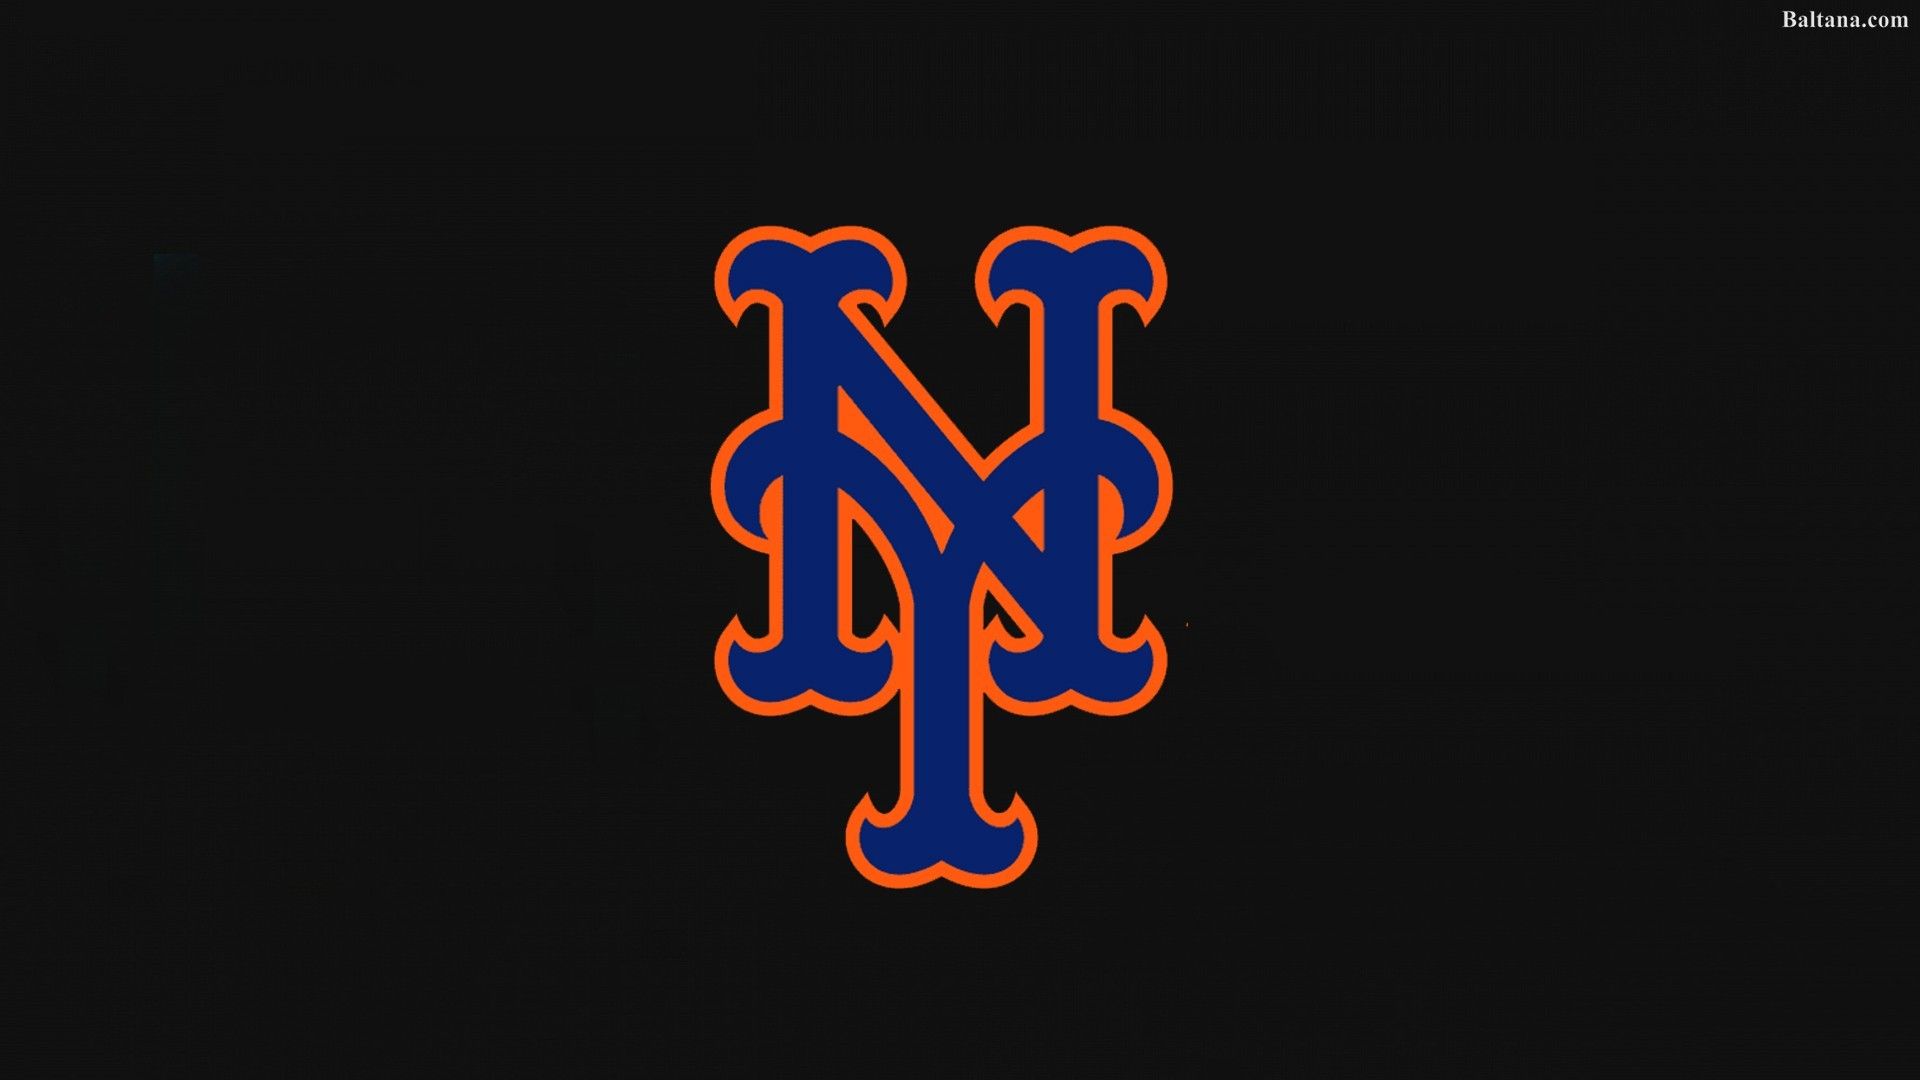 New York Mets Wallpapers - Wallpaper Cave